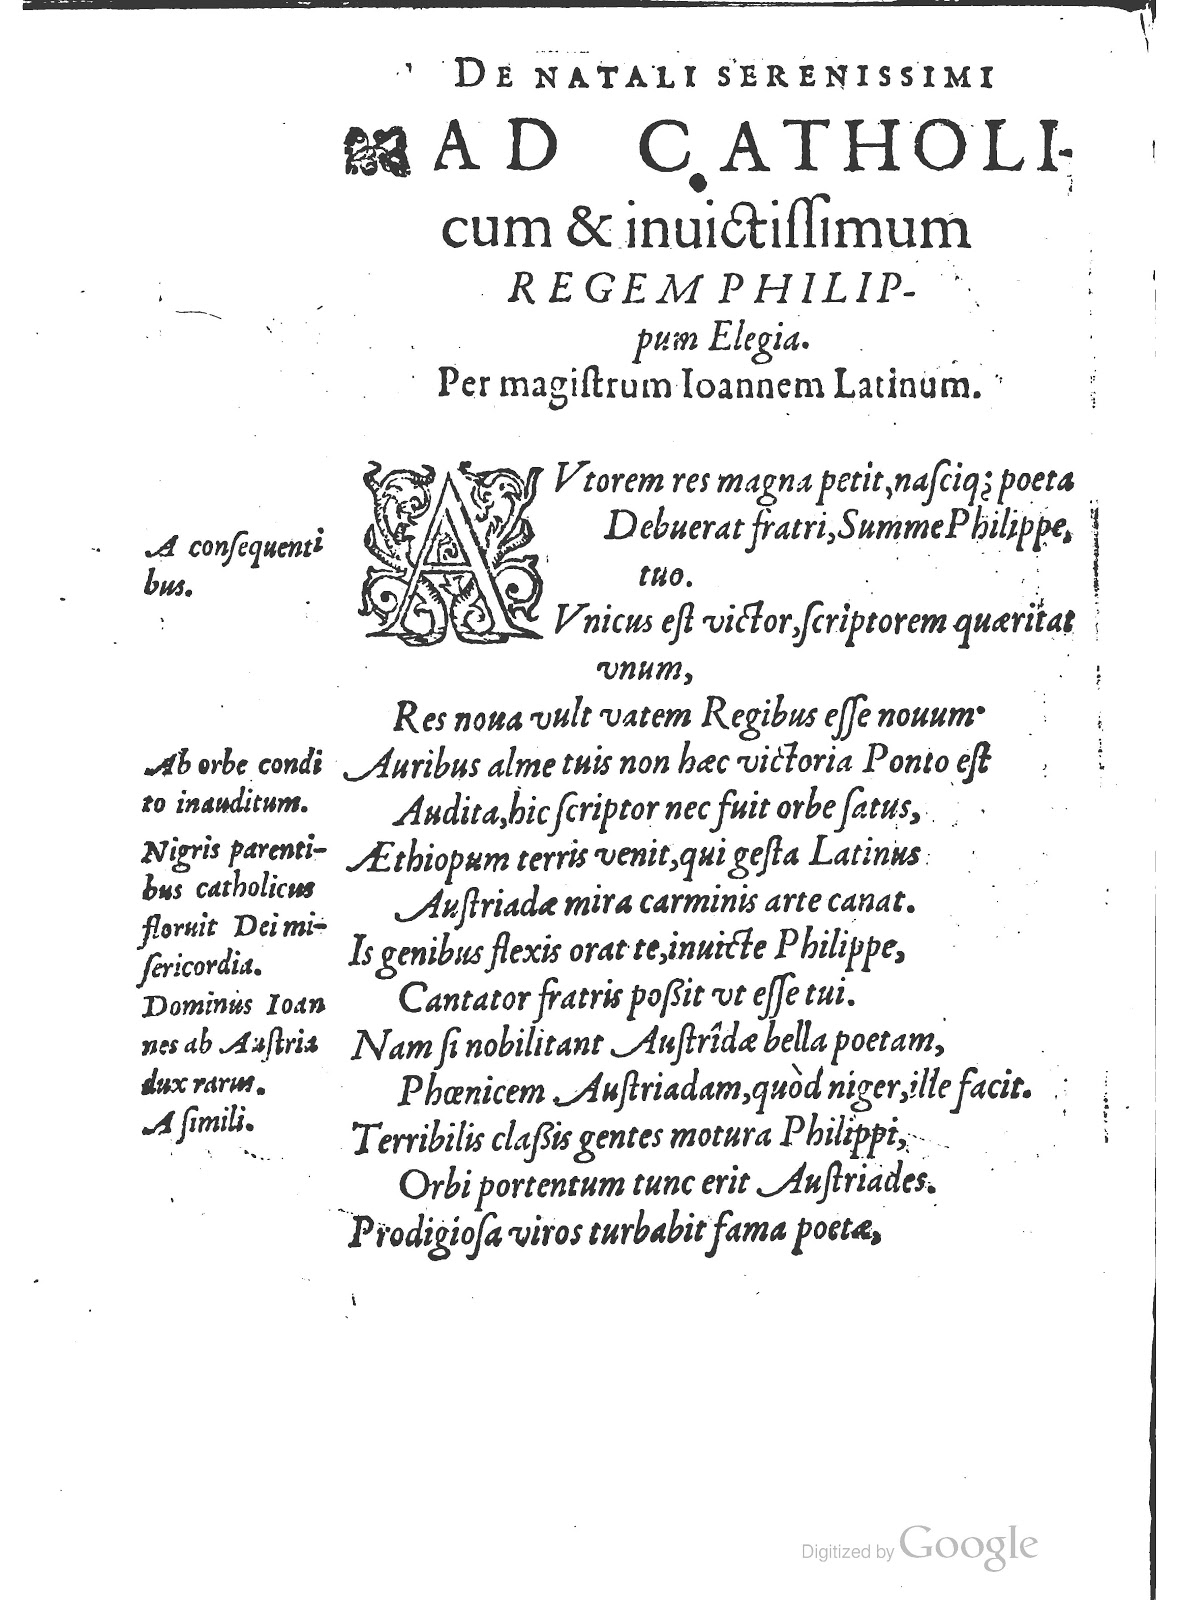 Renaissance Latin Poem of the Week